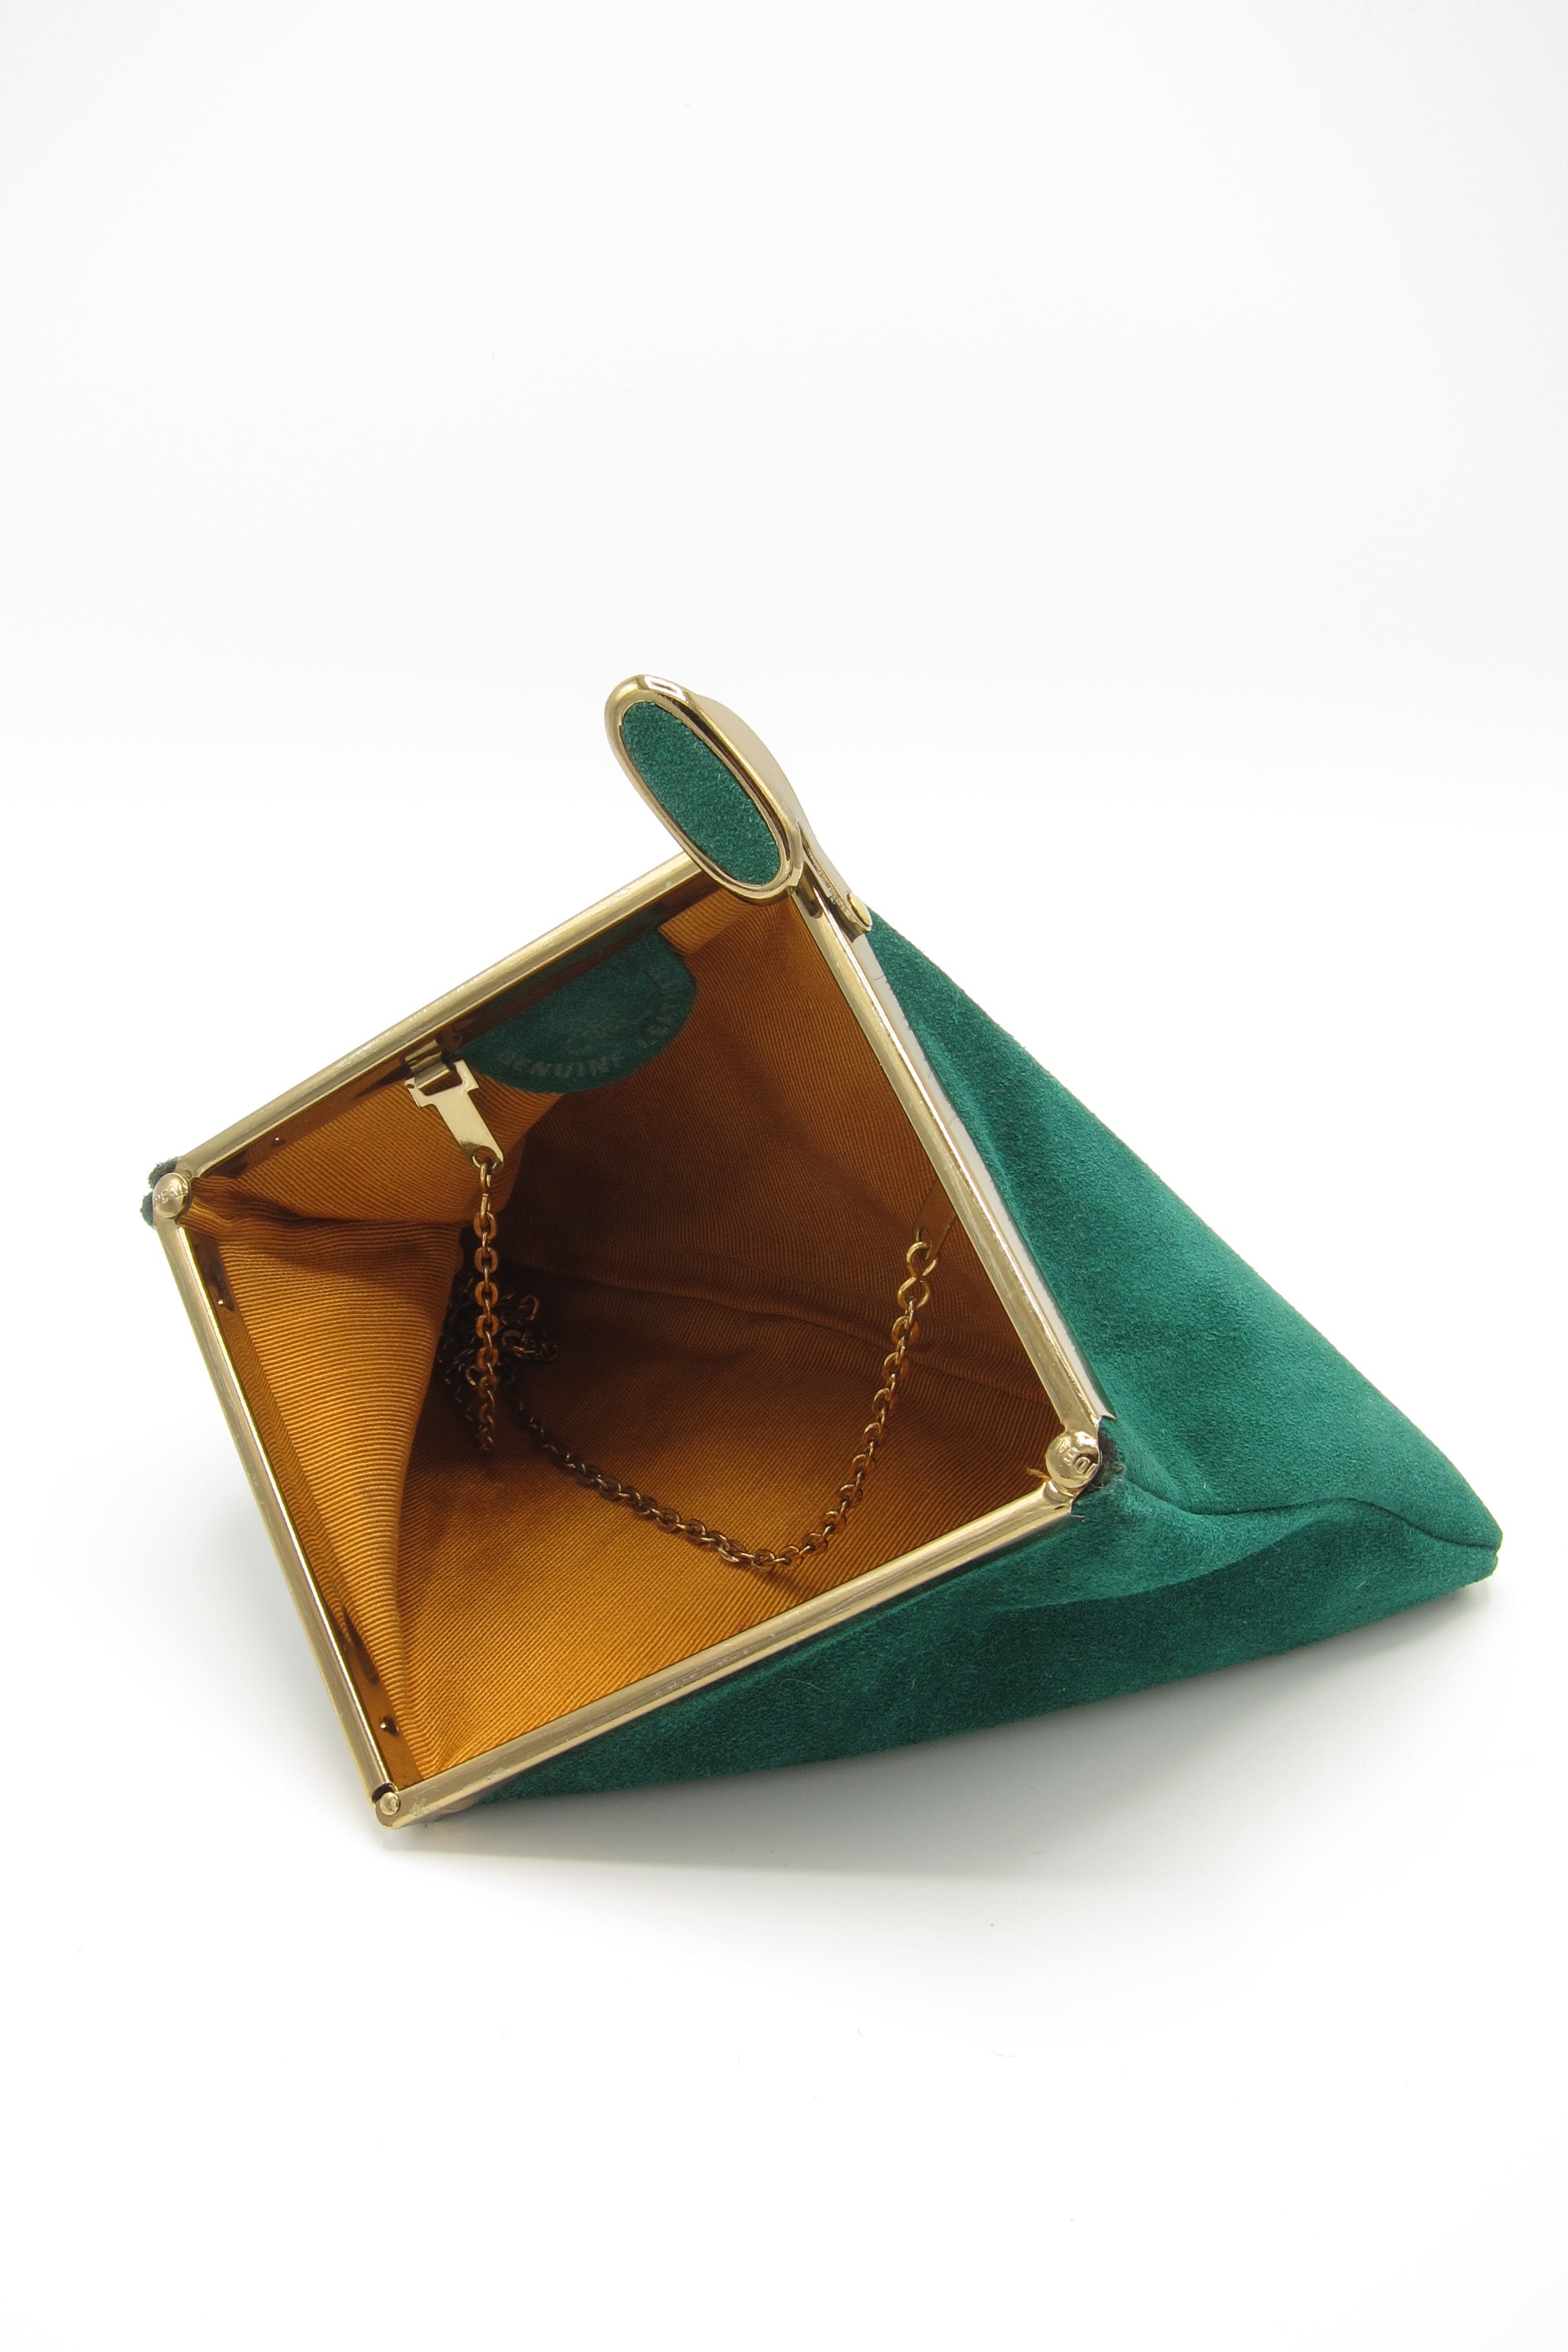 Wedge bag - Leaf green suede | penelopepenelope | Reviews on Judge.me